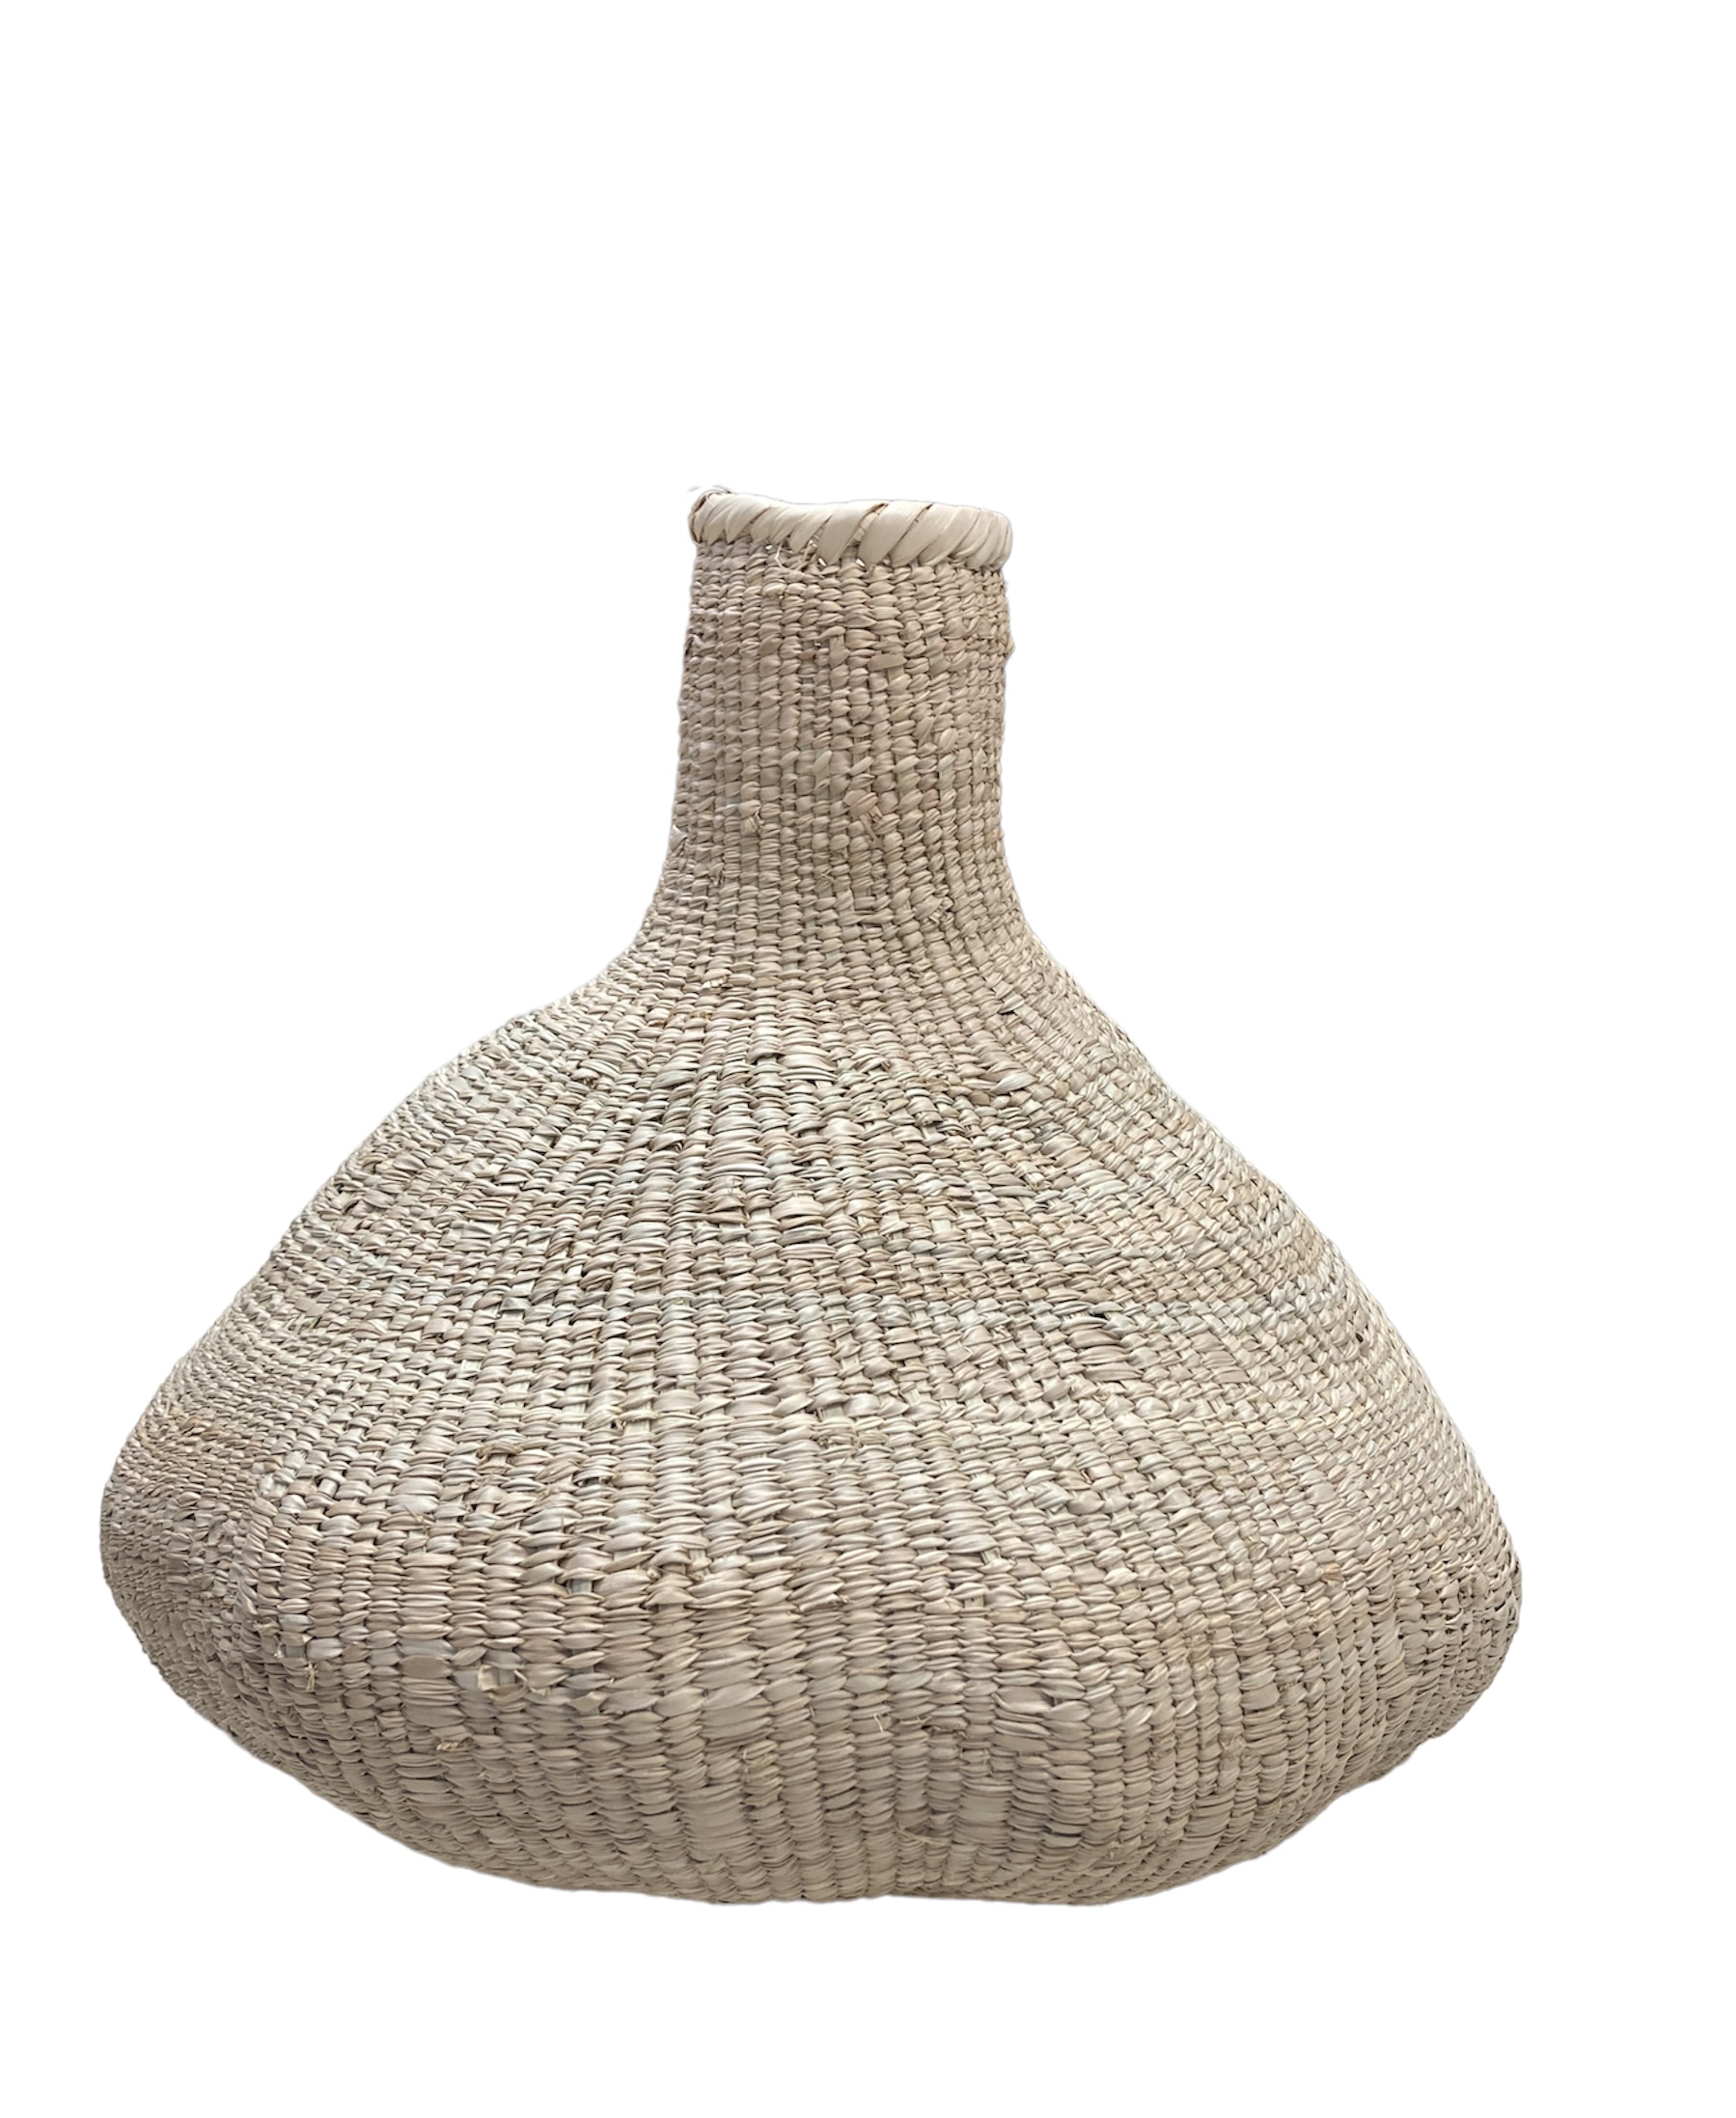 Garlic Gourd Basket from Zimbabwe : 13" - 16" in height